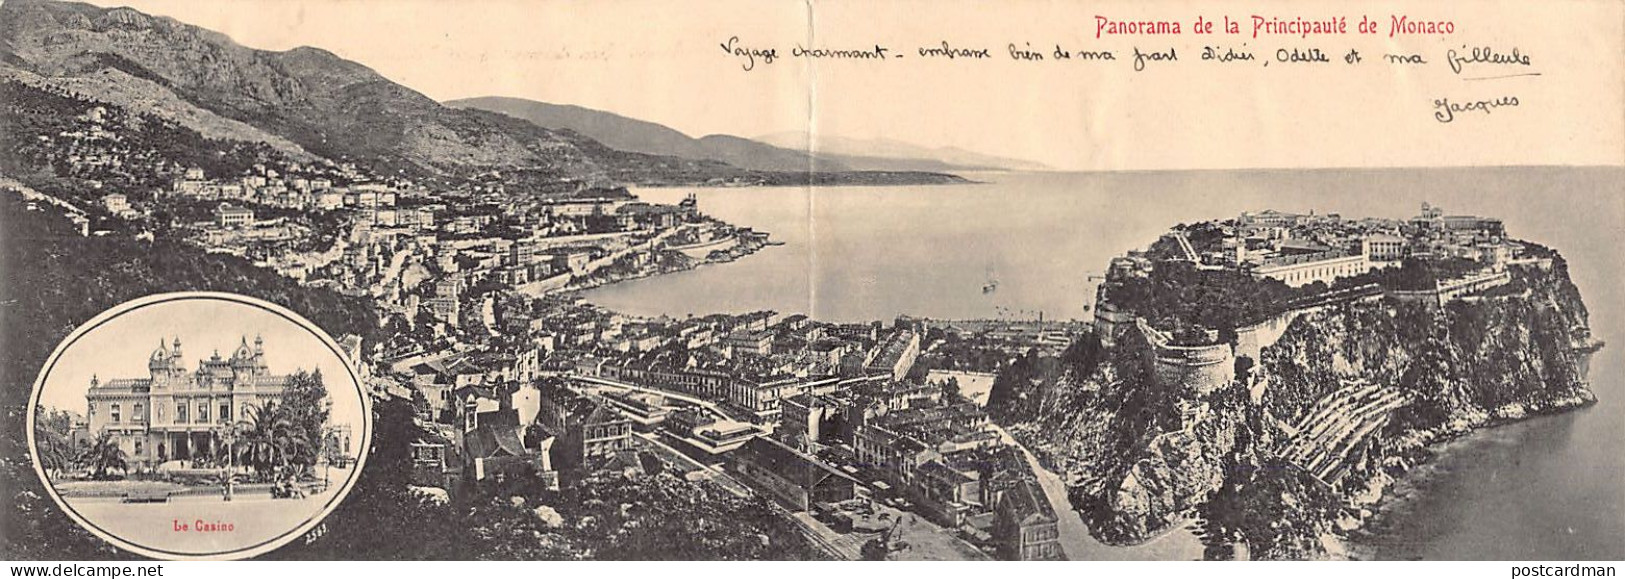 Panorama De La Principauté De Monaco - Le Casino - CARTE DOUBLE PANORAMIQUE - Panoramic Views